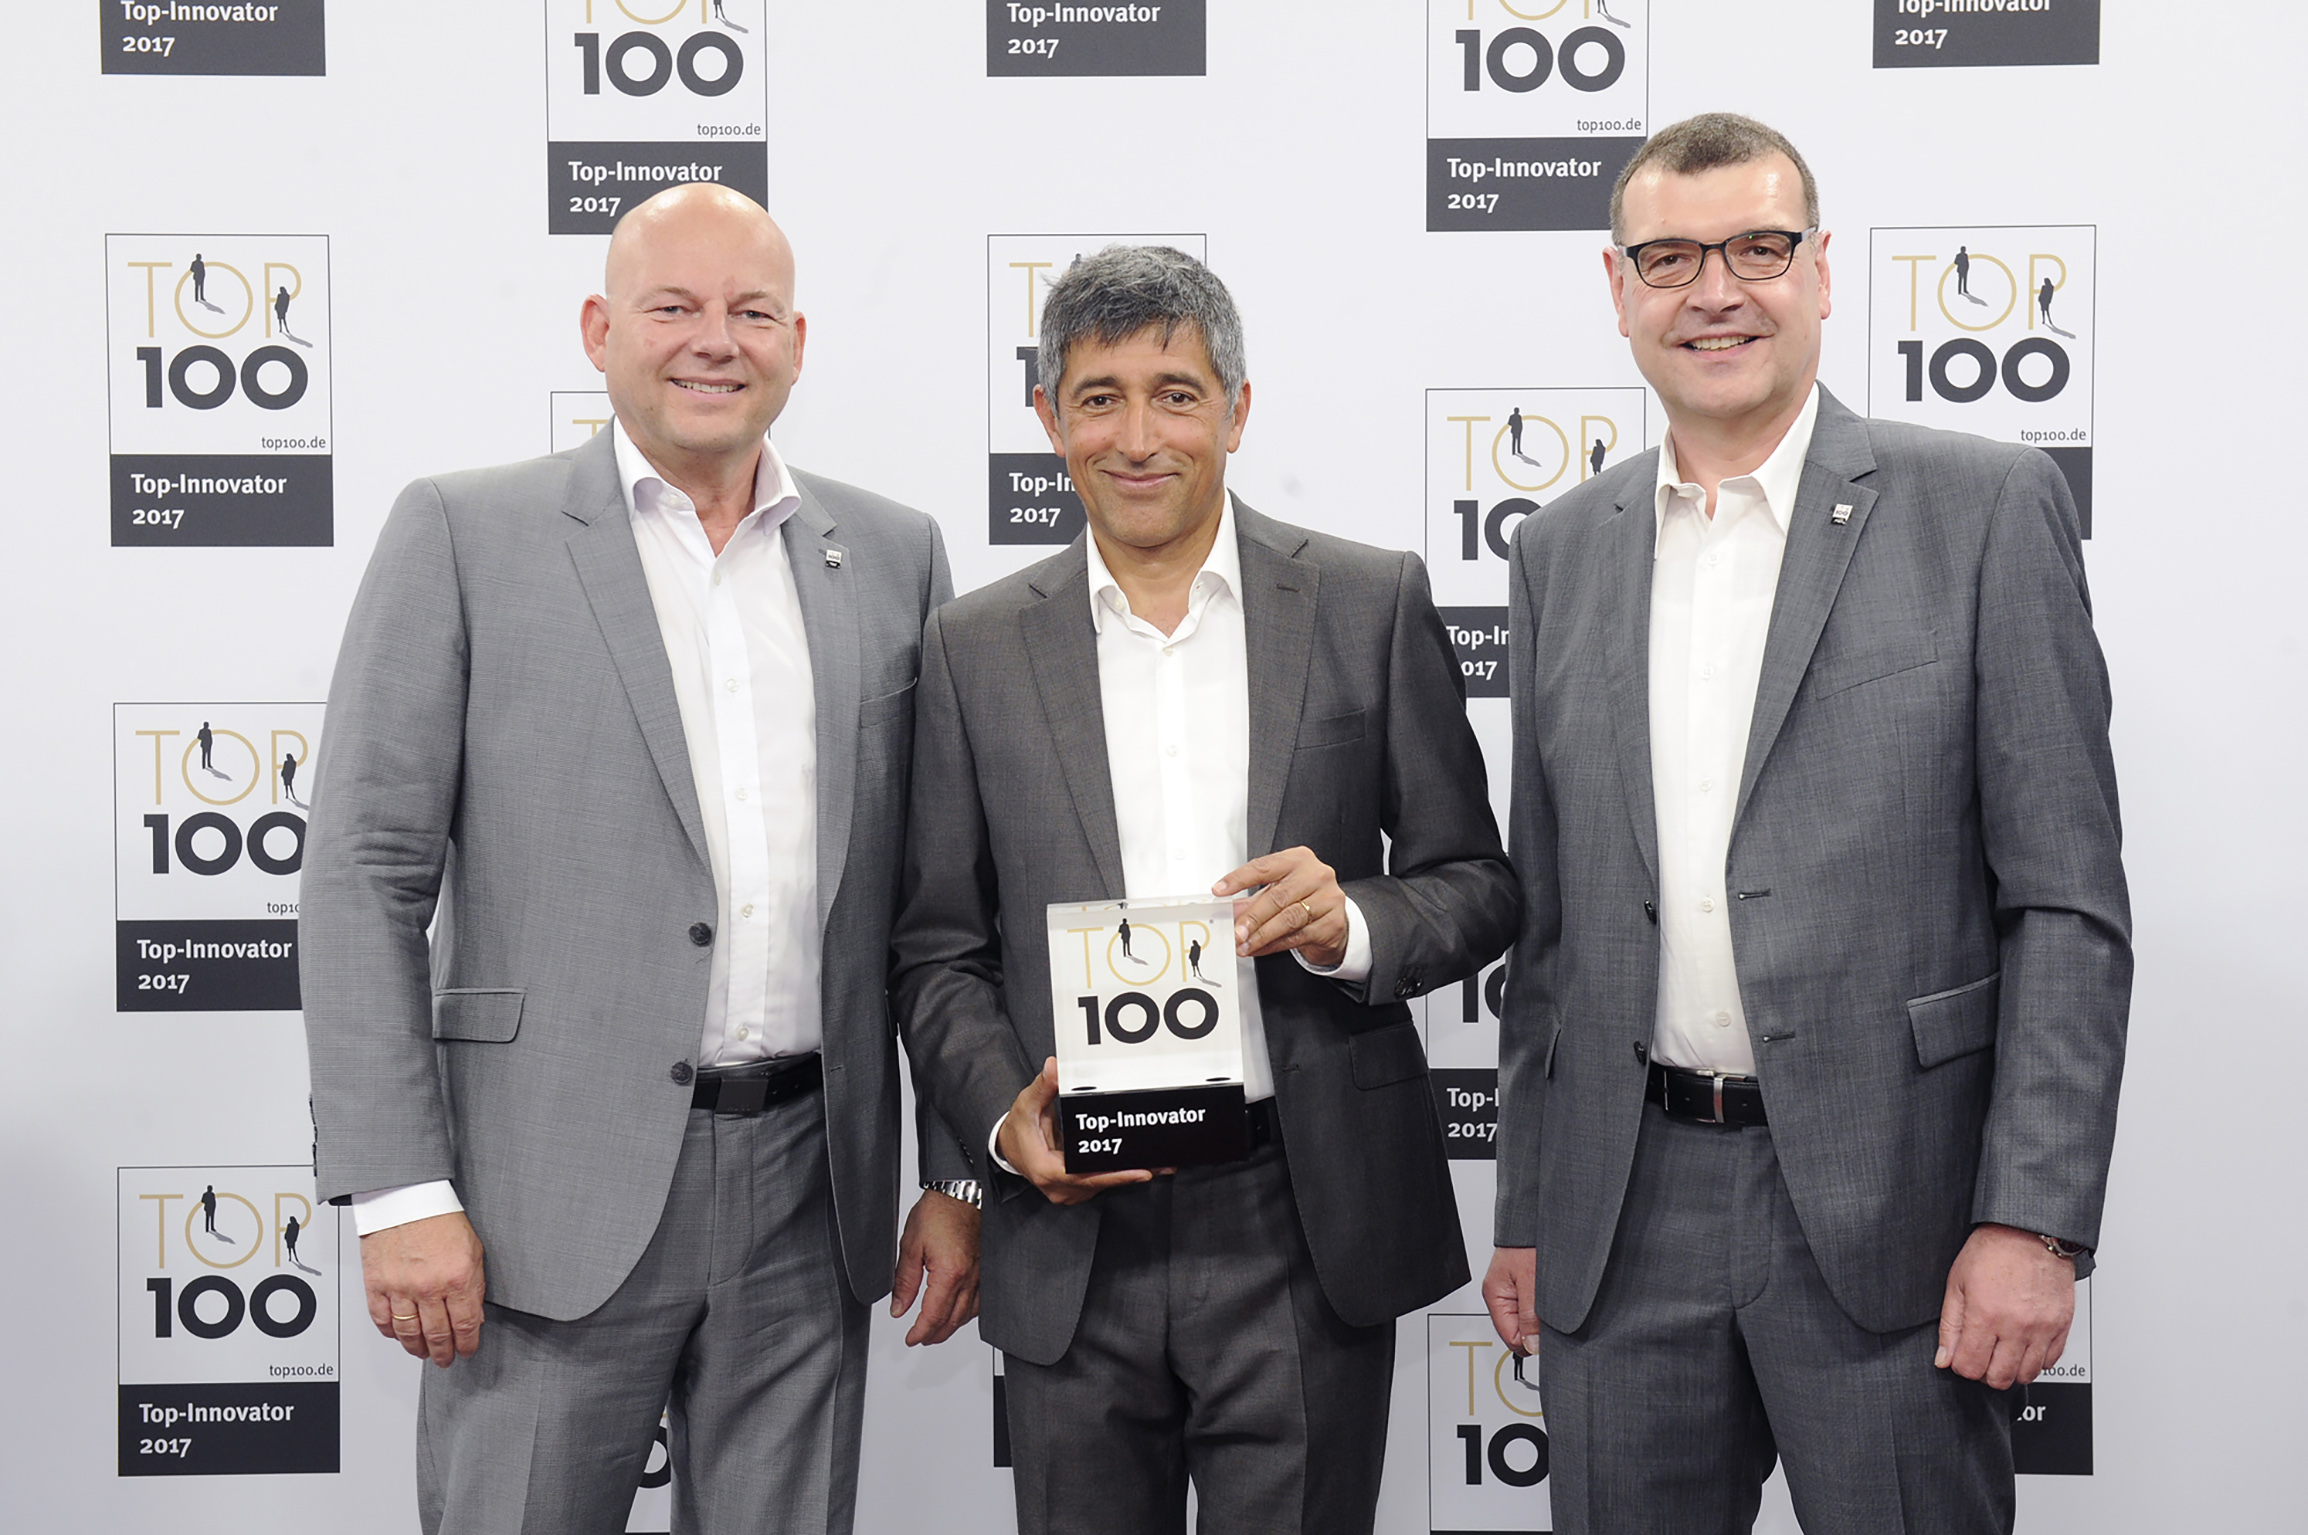 Top 100 award ceremony